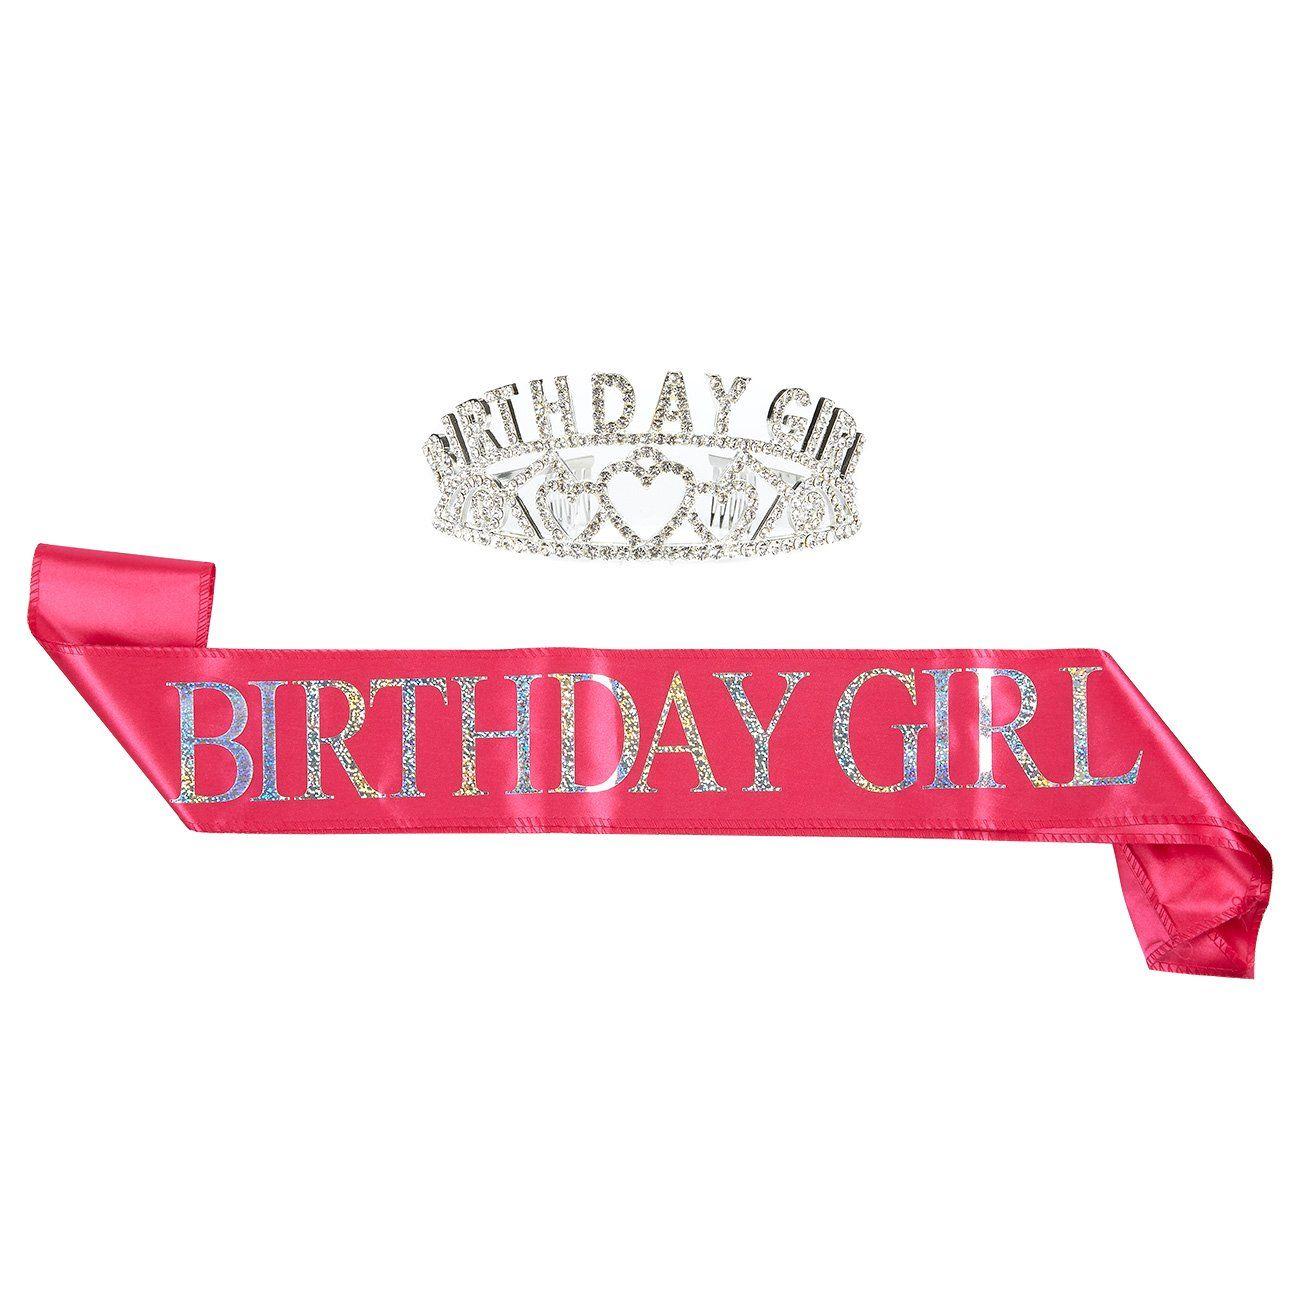 Birthday Girl Logo - Blue Panda 2 Pack Set Birthday Girl Tiara Birthday Sash